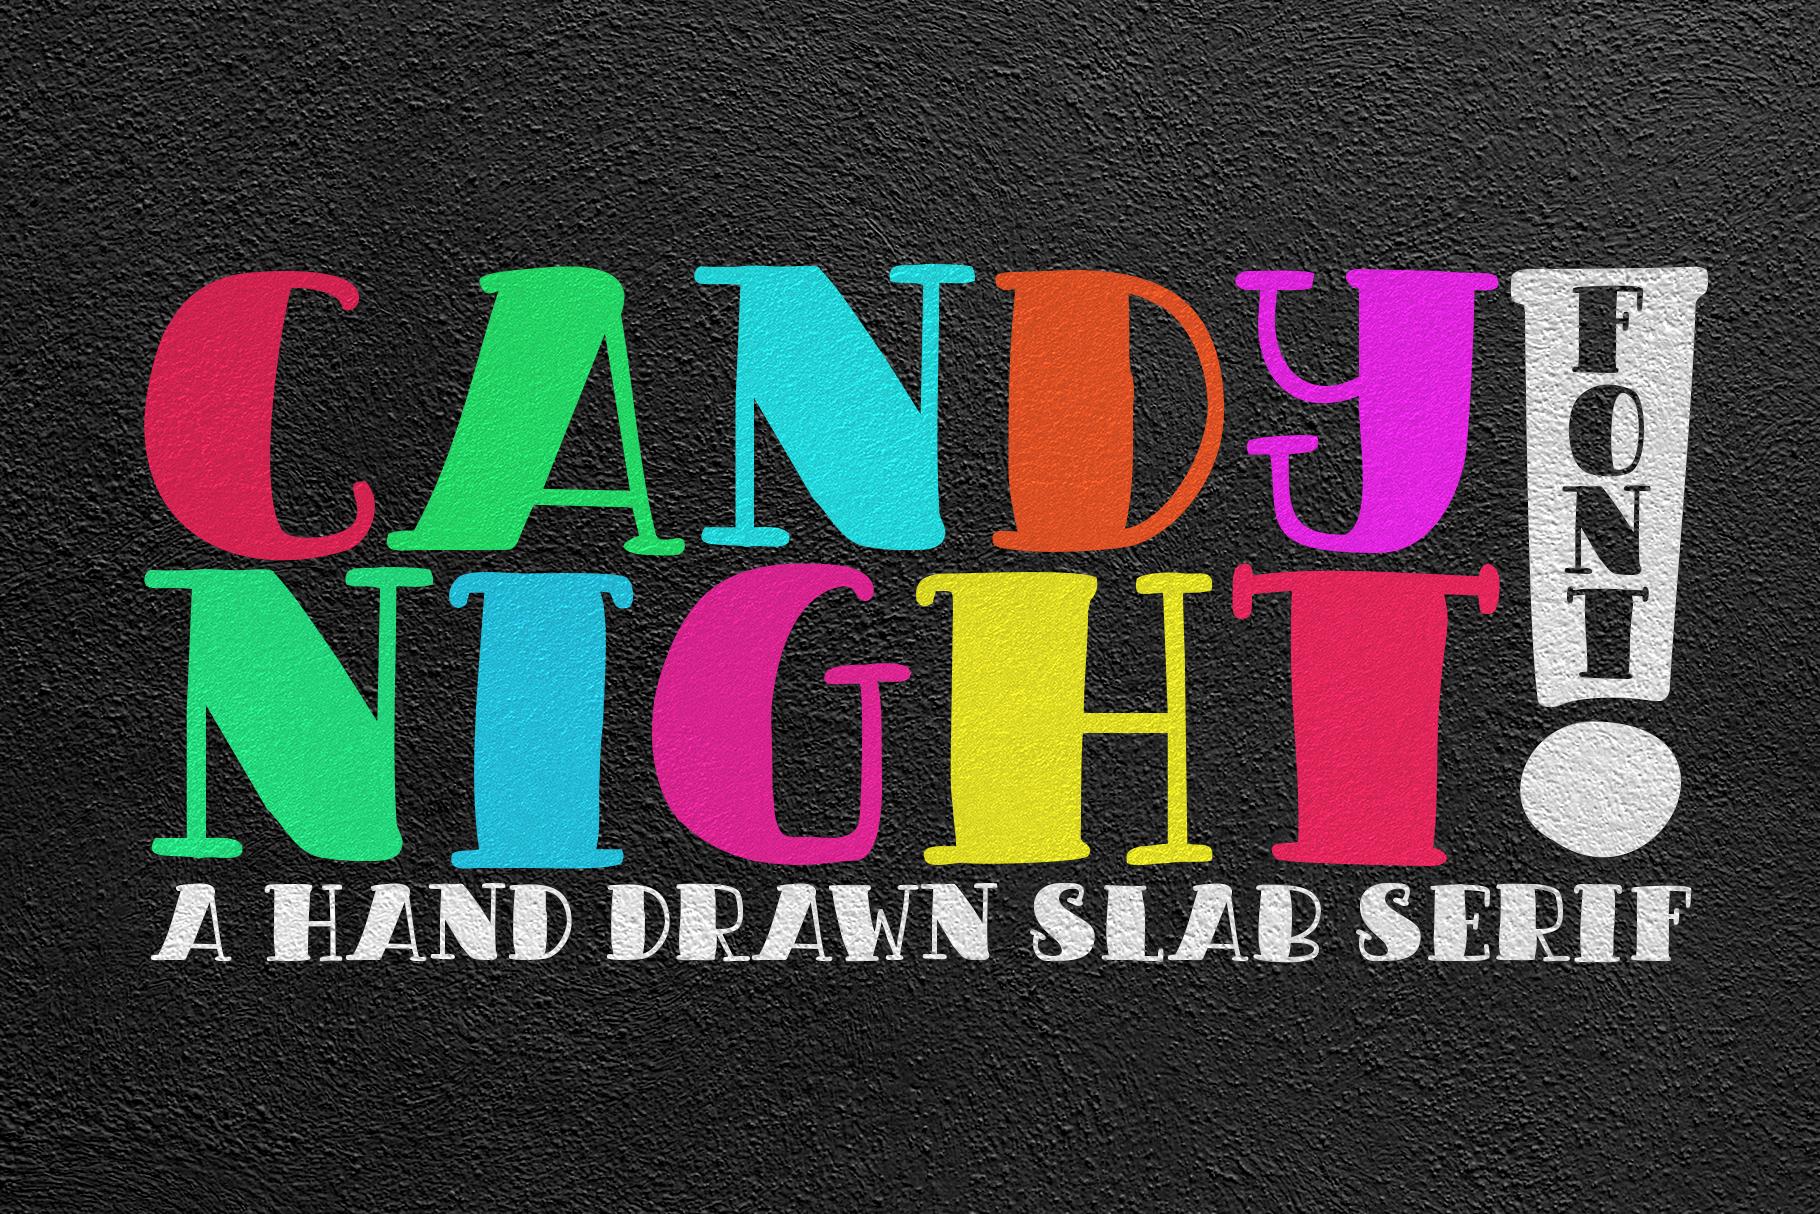 Candy Night Font